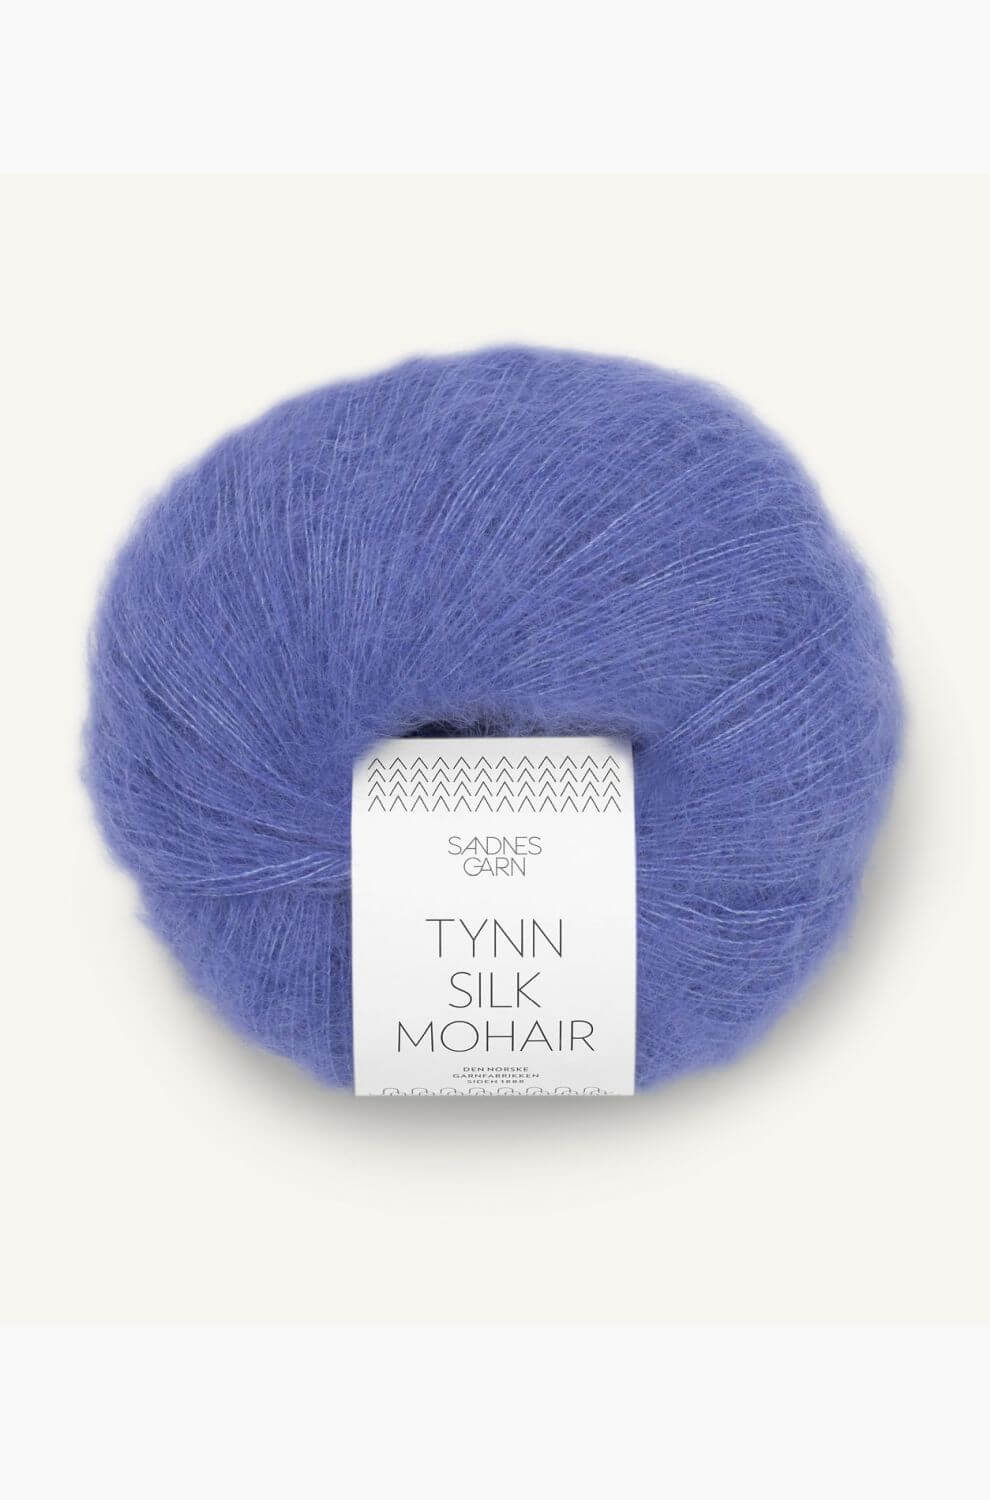 Sandnes Garn Tynn Silk Mohair Yarn - 9825 Sunny Lime at Jimmy Beans Wool